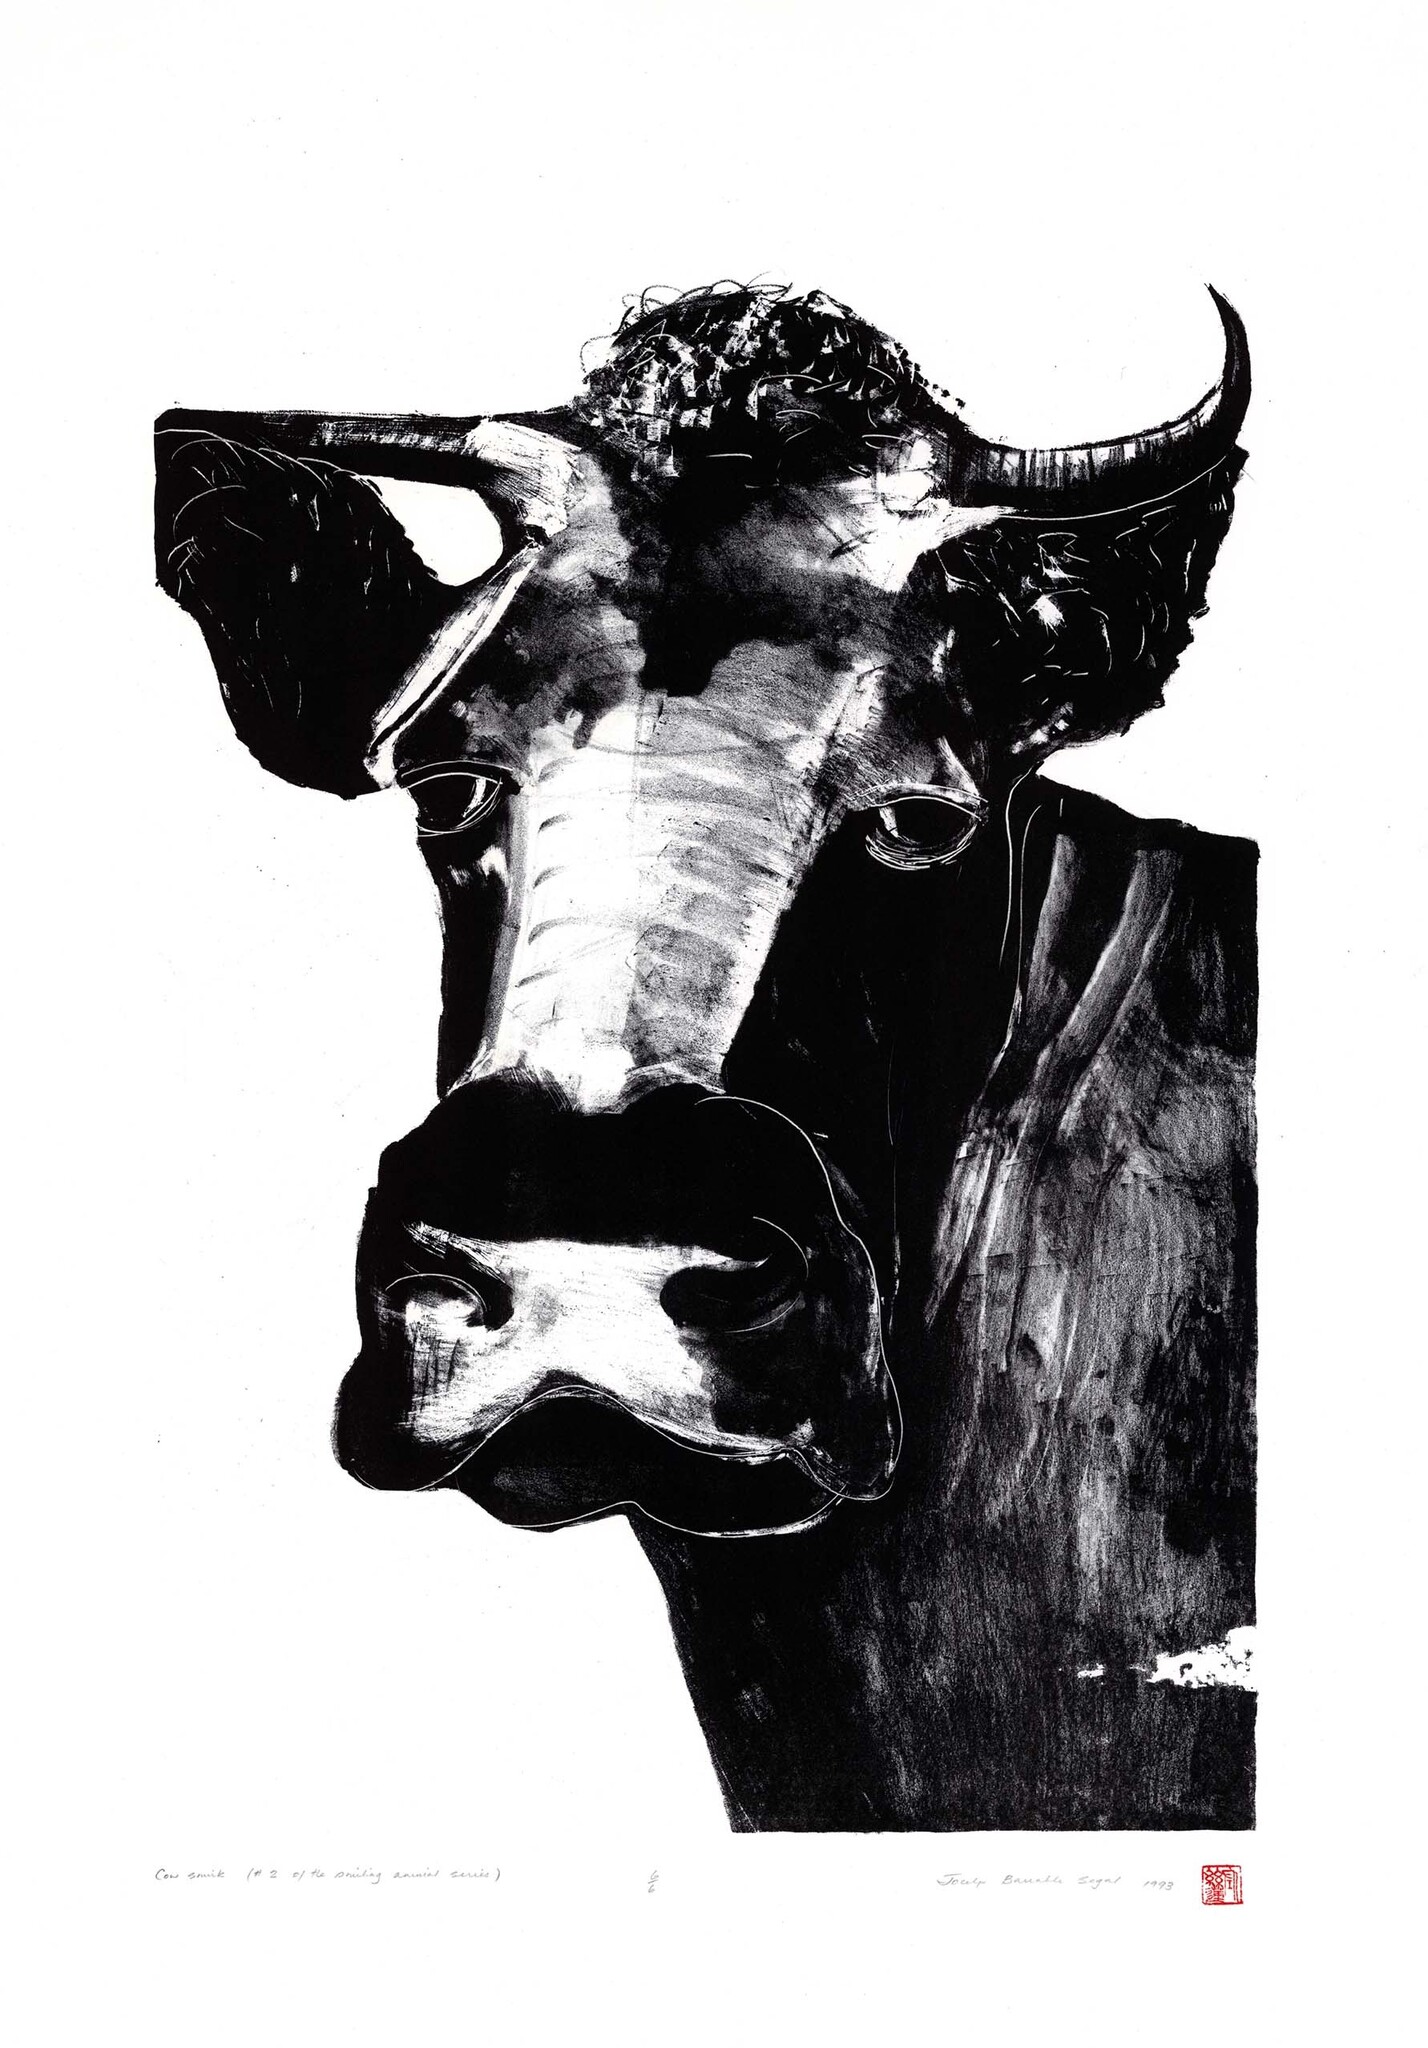 Cow Smirk Smiling - animal series #2-1